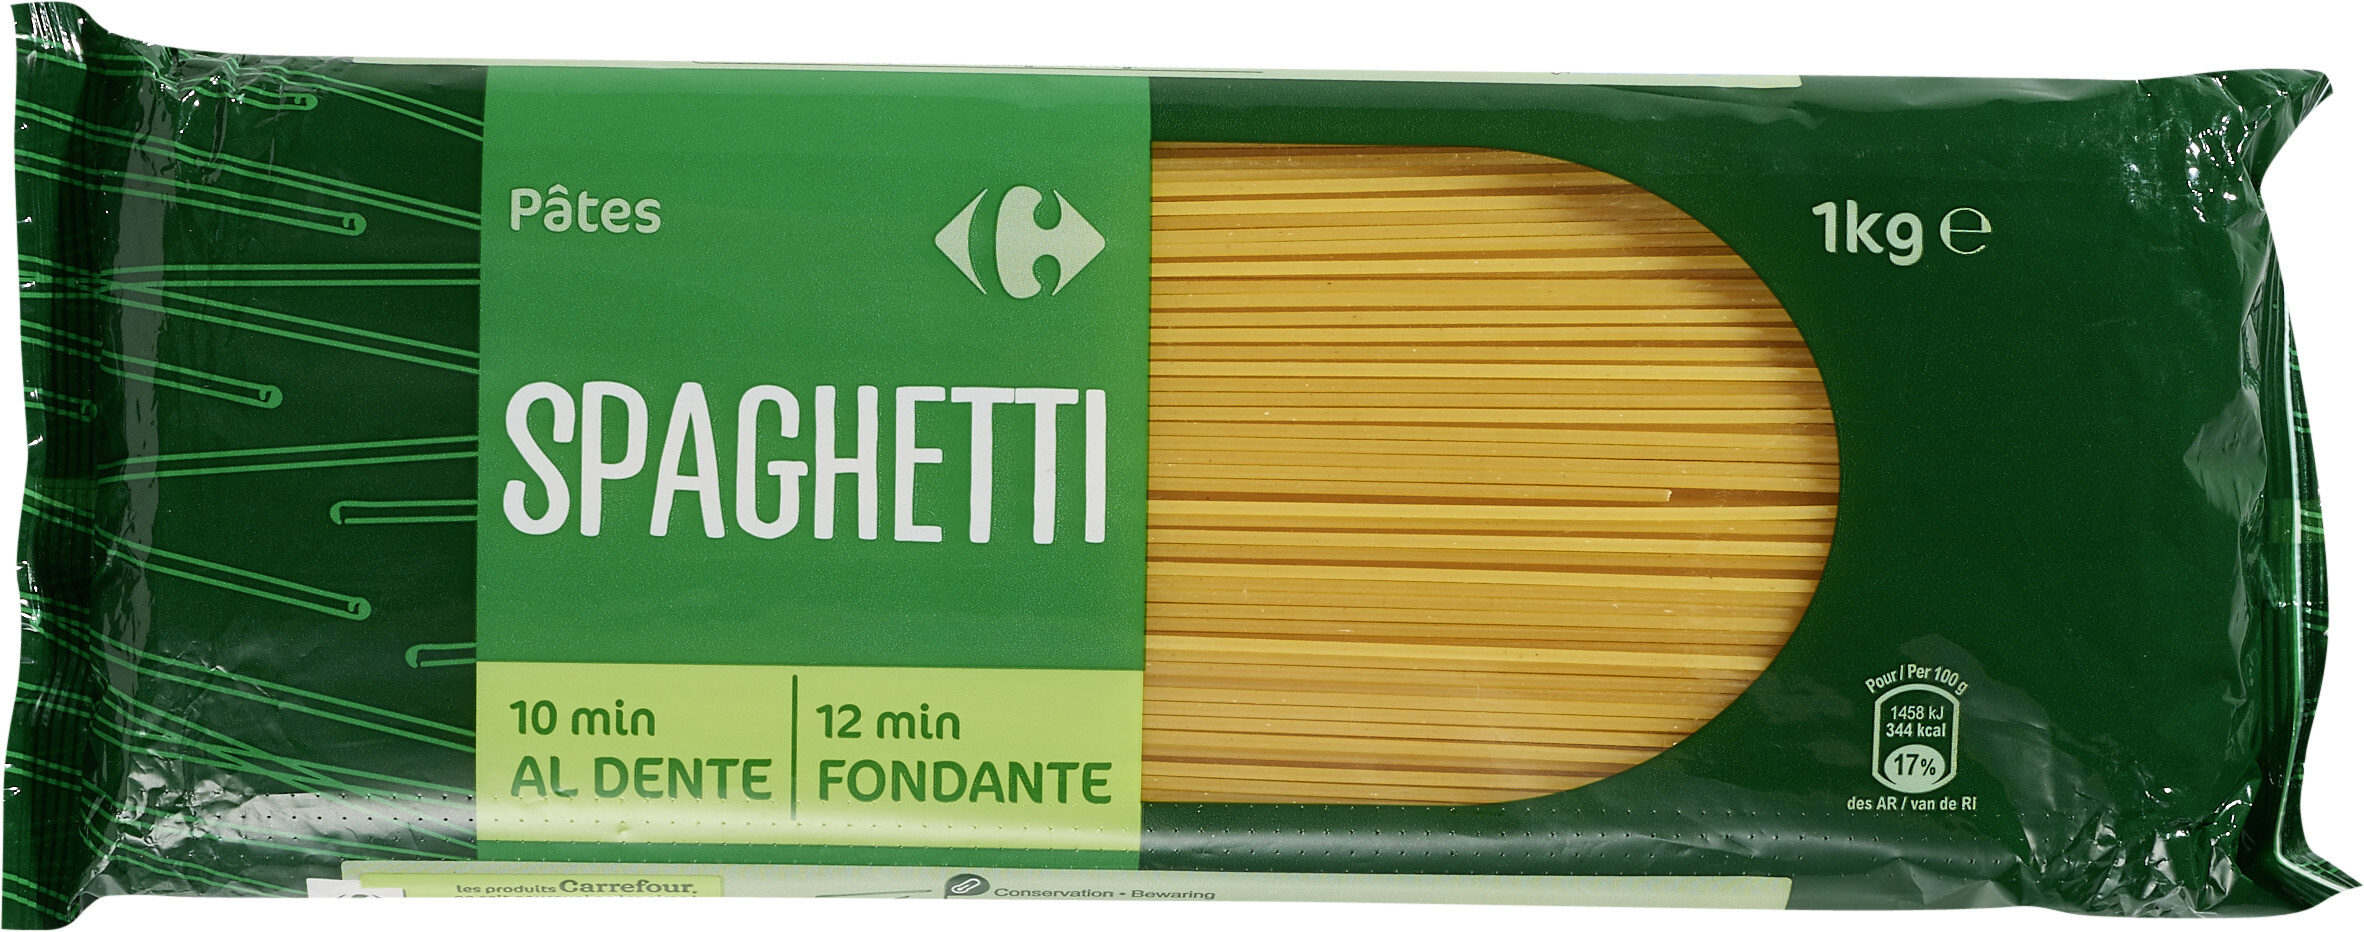 Spaghetti - Produkt - fr